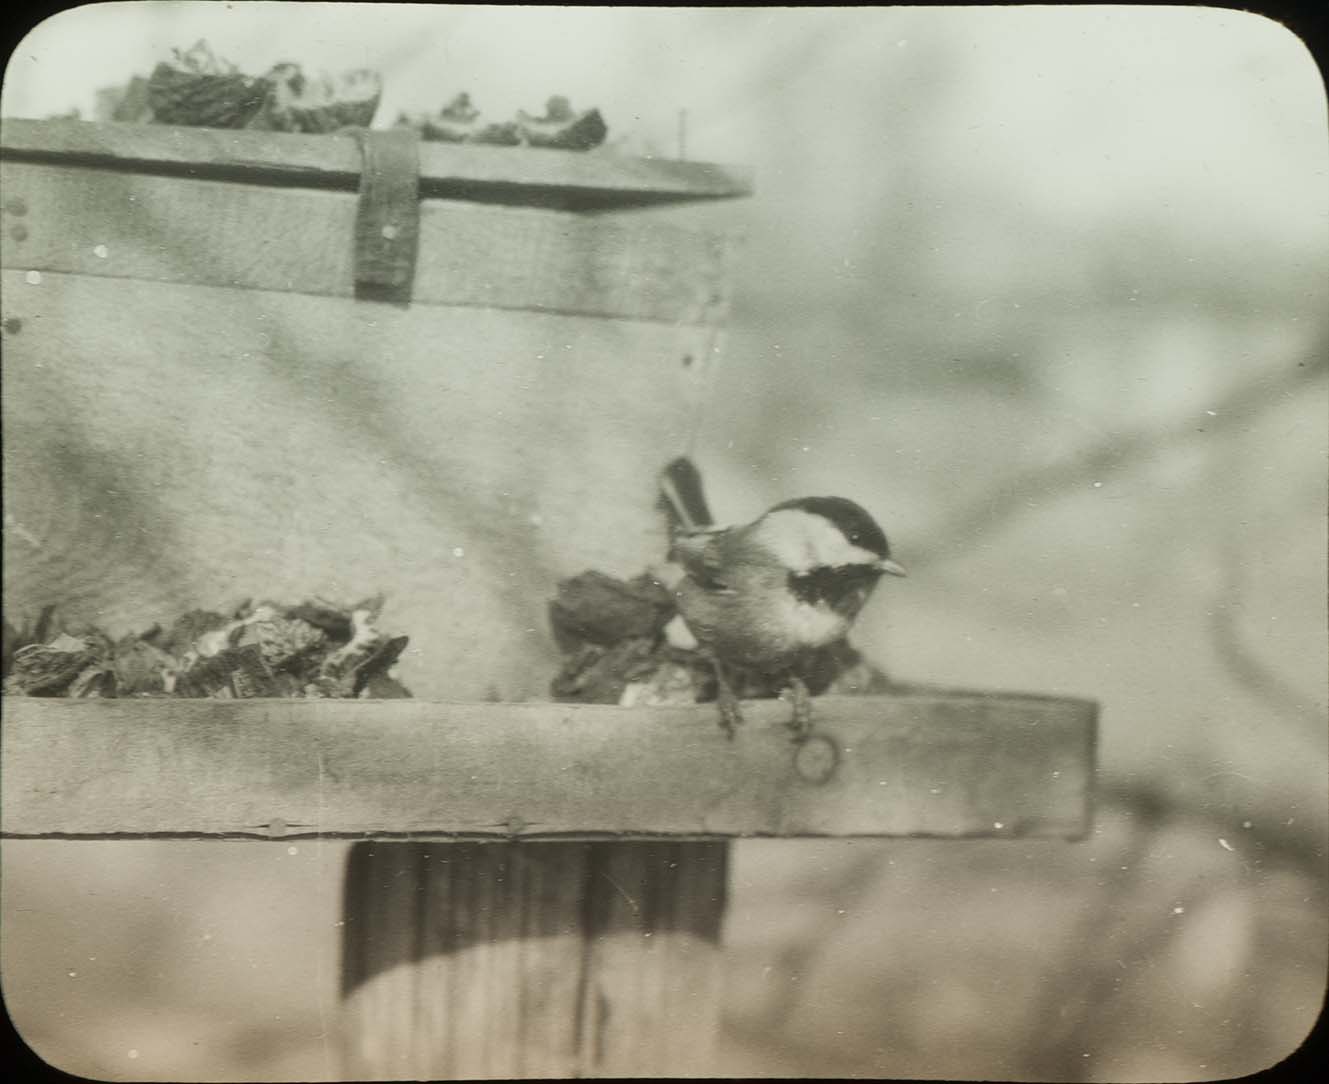 Lantern slide and photograph of a Chickadee at a bird feeder